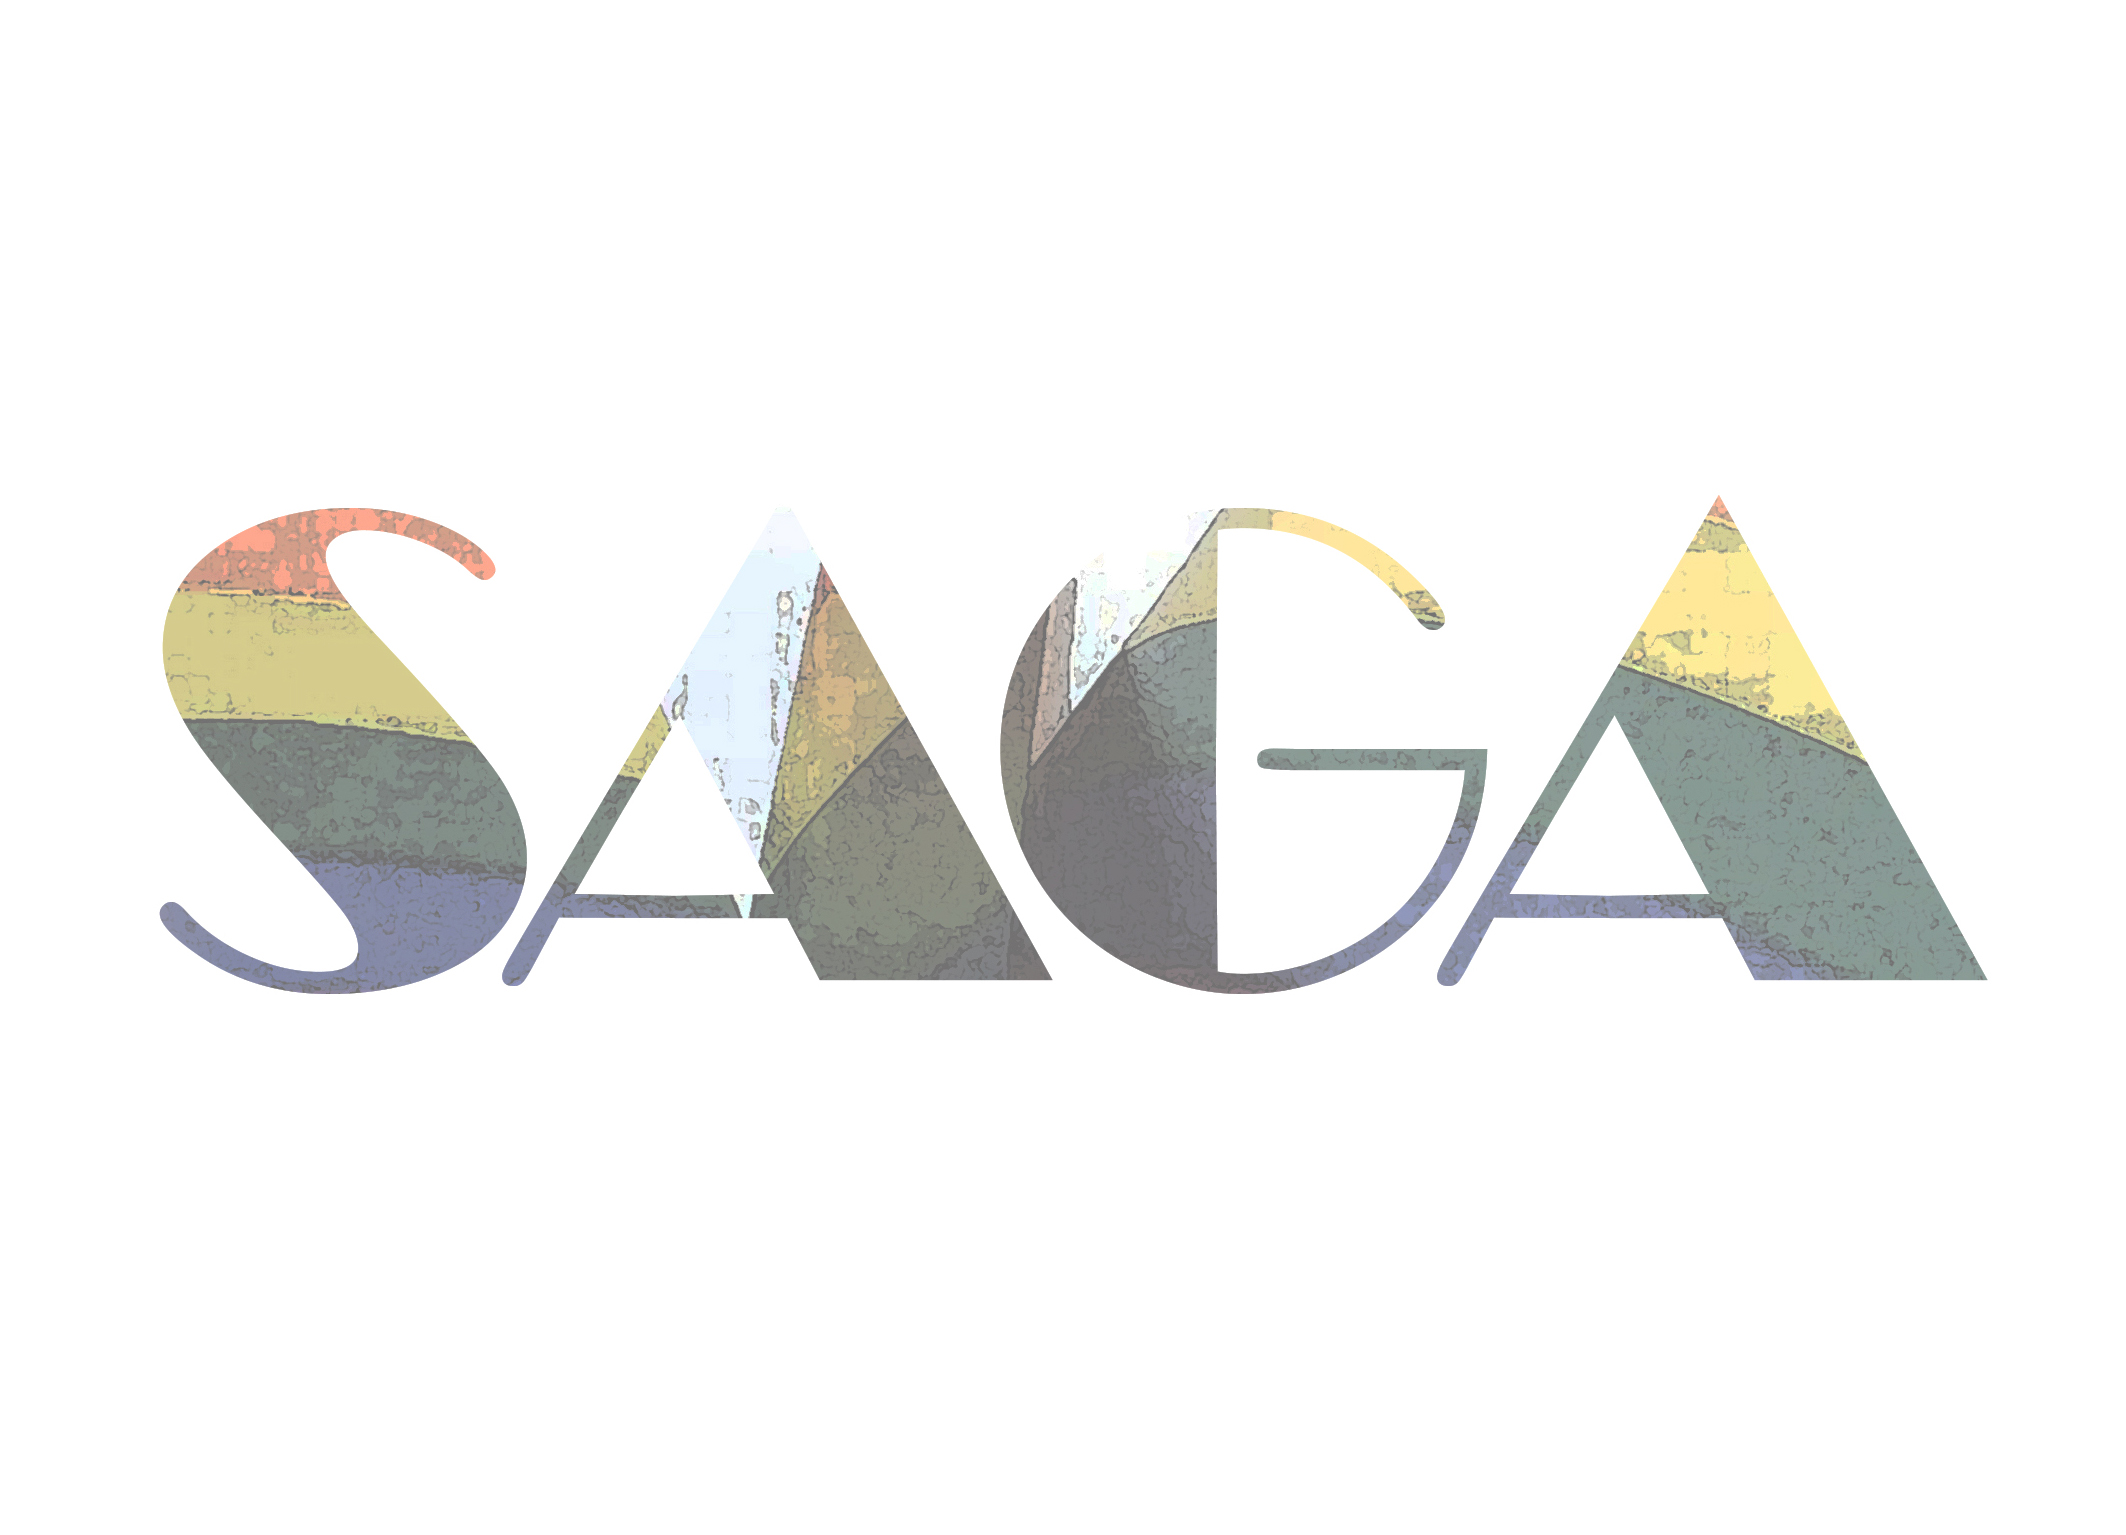 Interview | Saga Studentradion